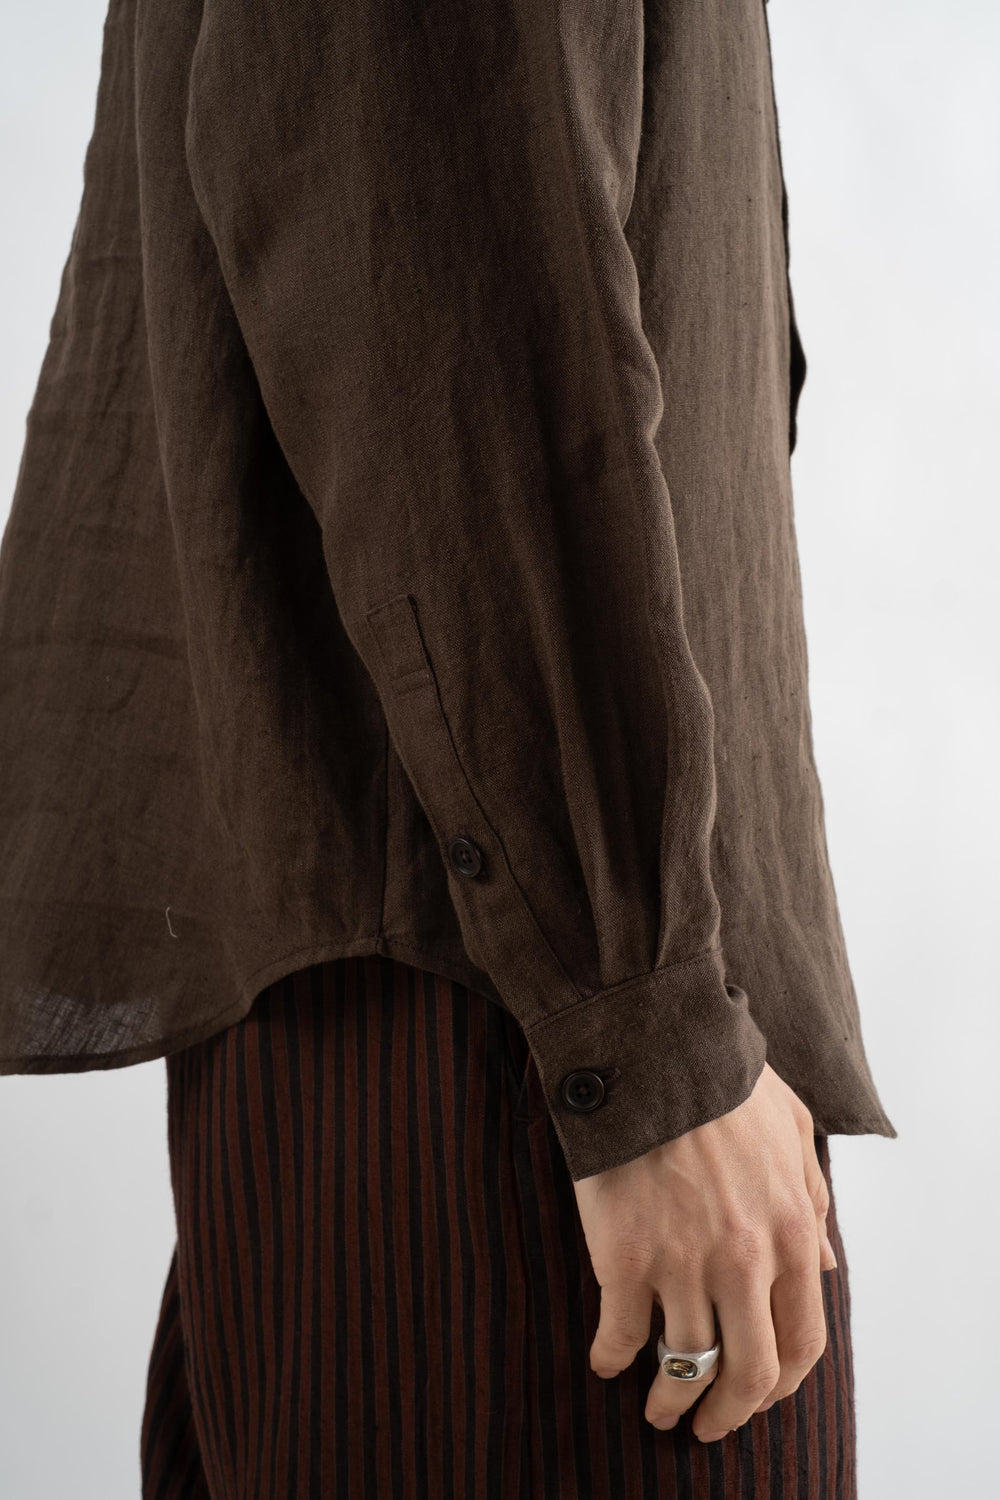 Popover Shirt In Hemp-Brown Tumbled Linen